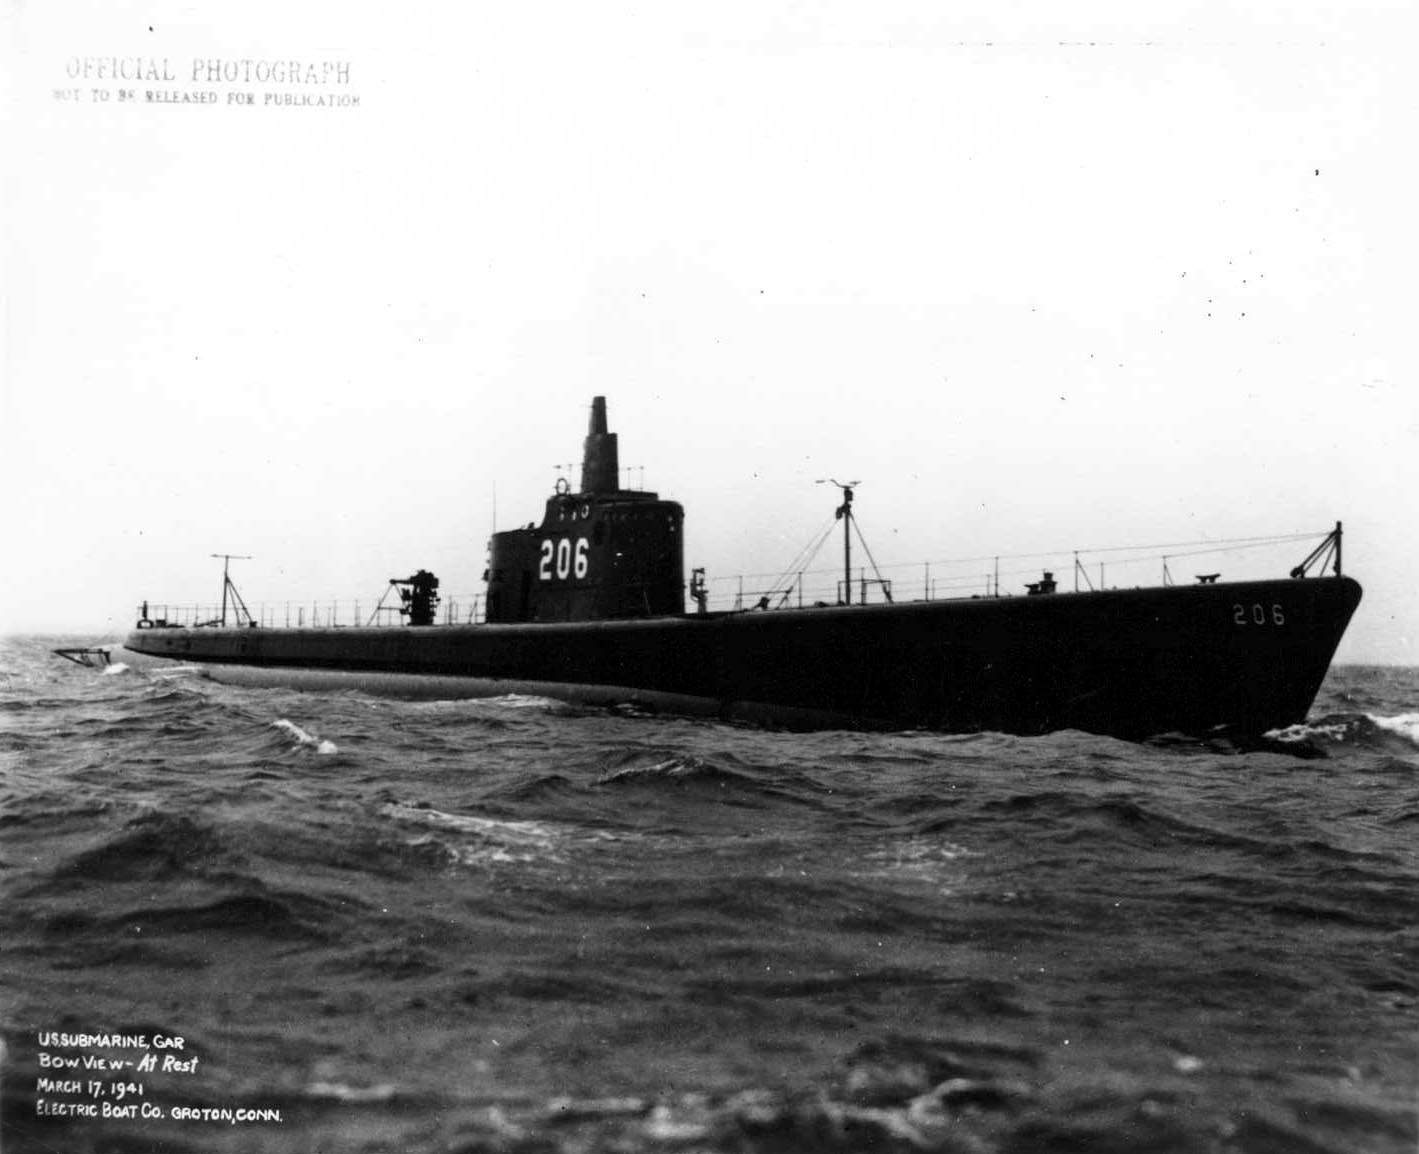 Bow view of submarine Gar, Groton, Connecticut, United States, 17 Mar 1941